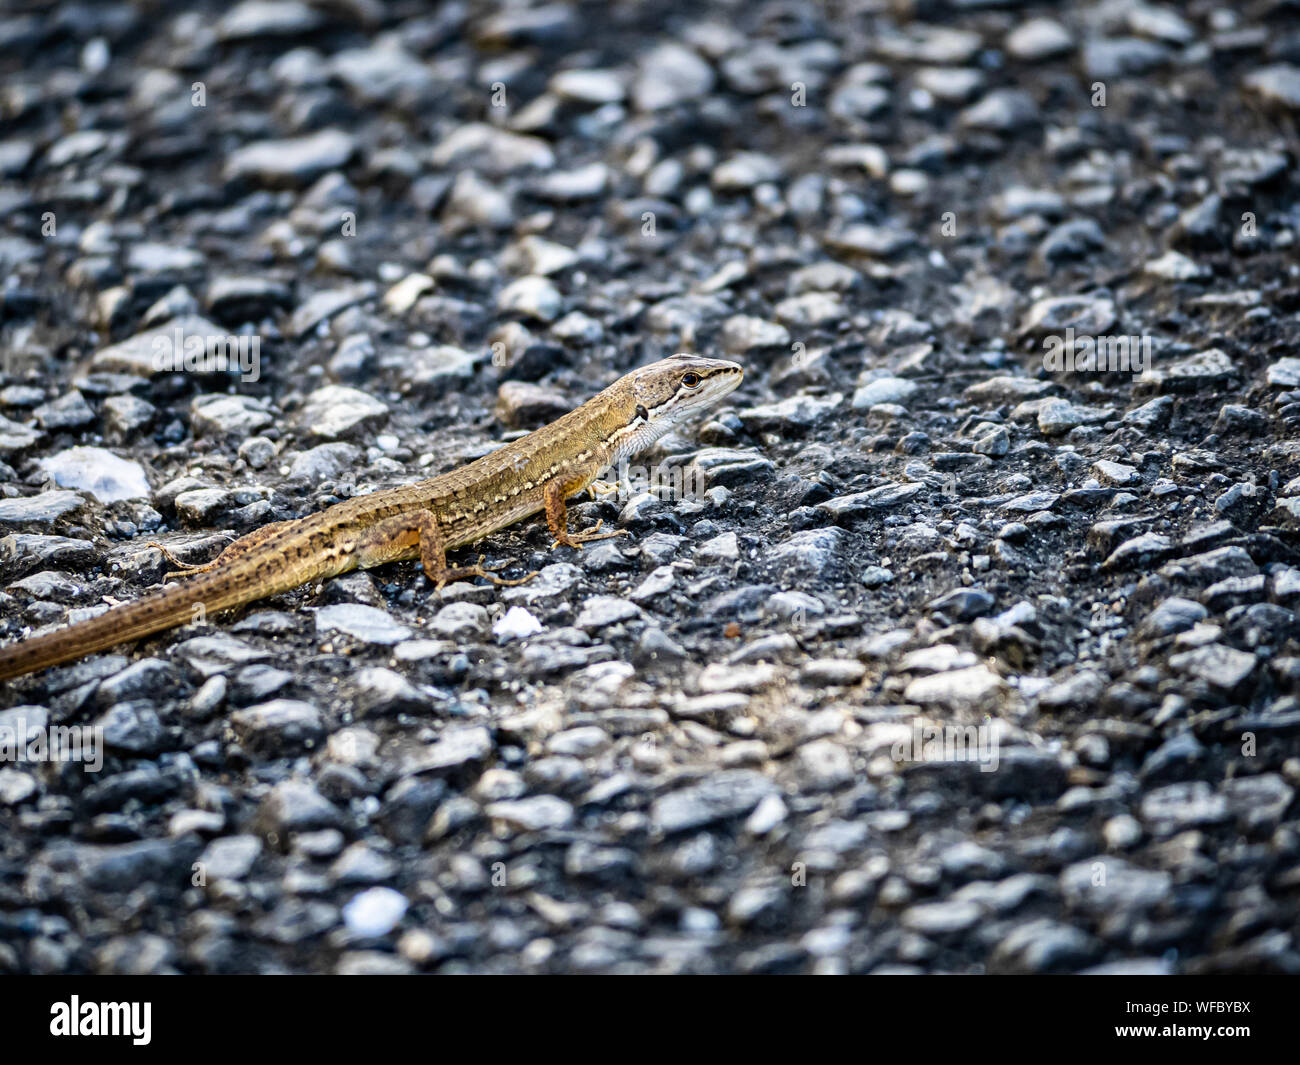 A Japanese grass lizard, Takydromus tachydromoides, scurries across a walking path in Yokohama, Japan. Stock Photo